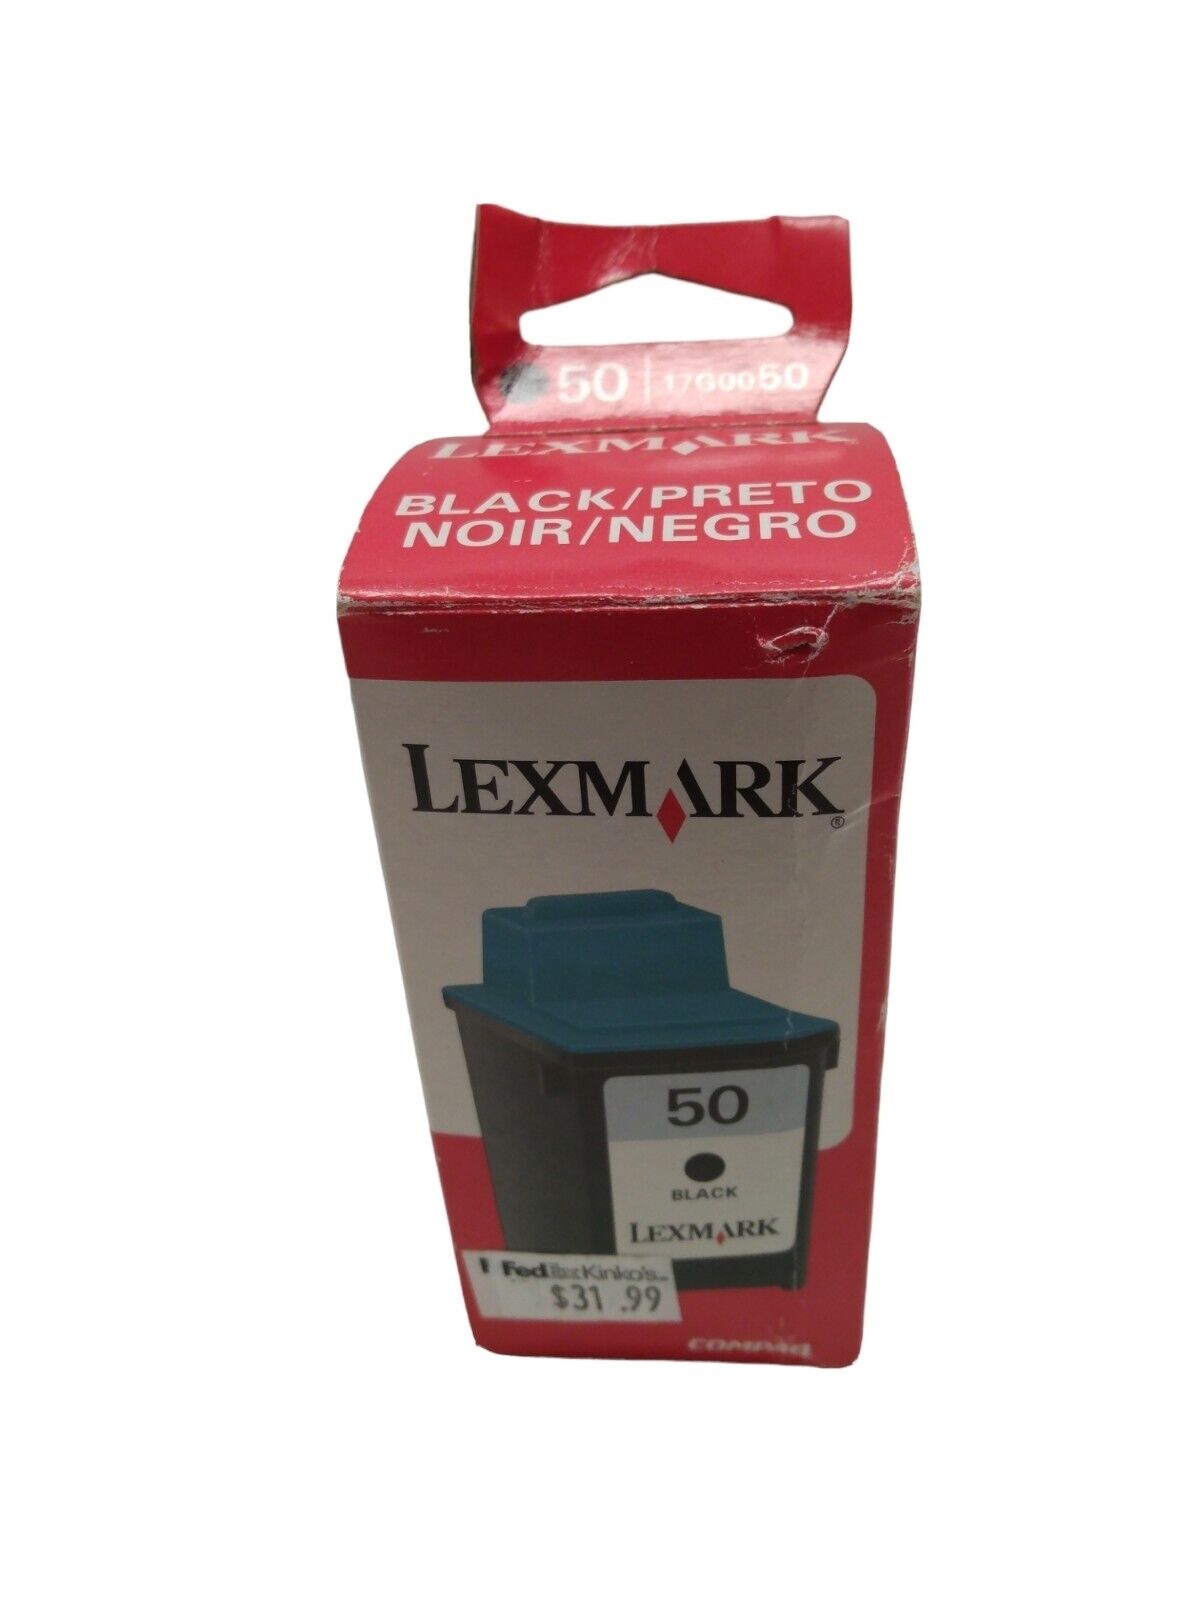 LEXMARK 50 Black Ink Cartridge New Factory Sealed 